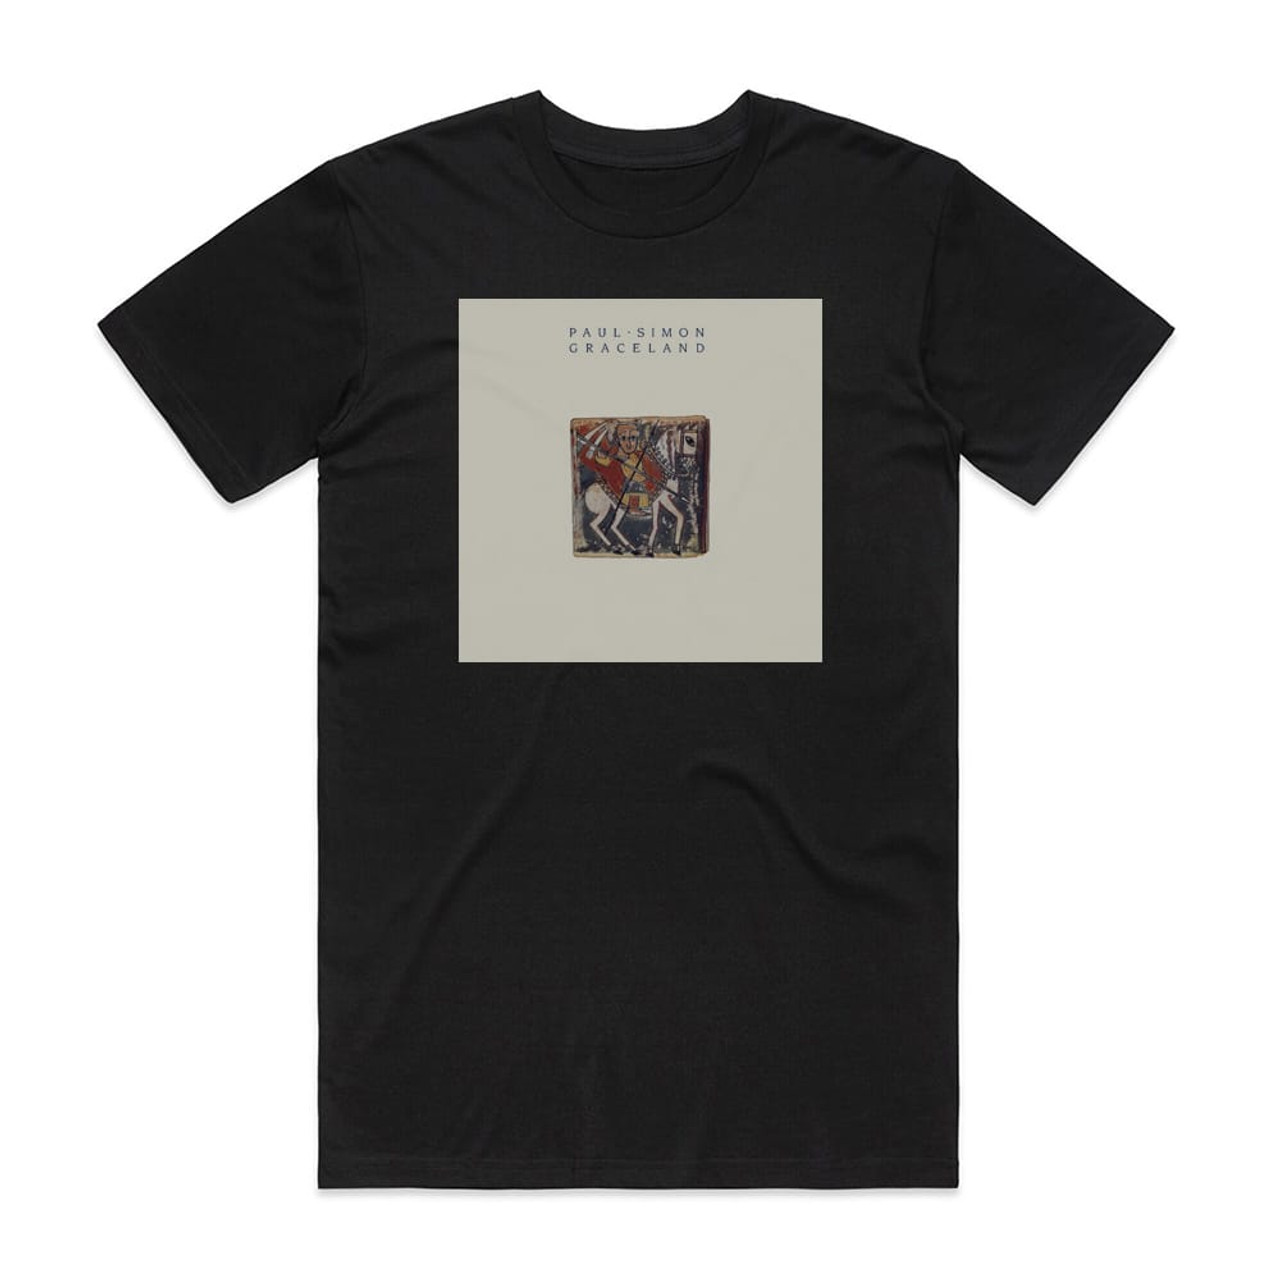 Paul Simon Graceland Album Cover T-Shirt Black